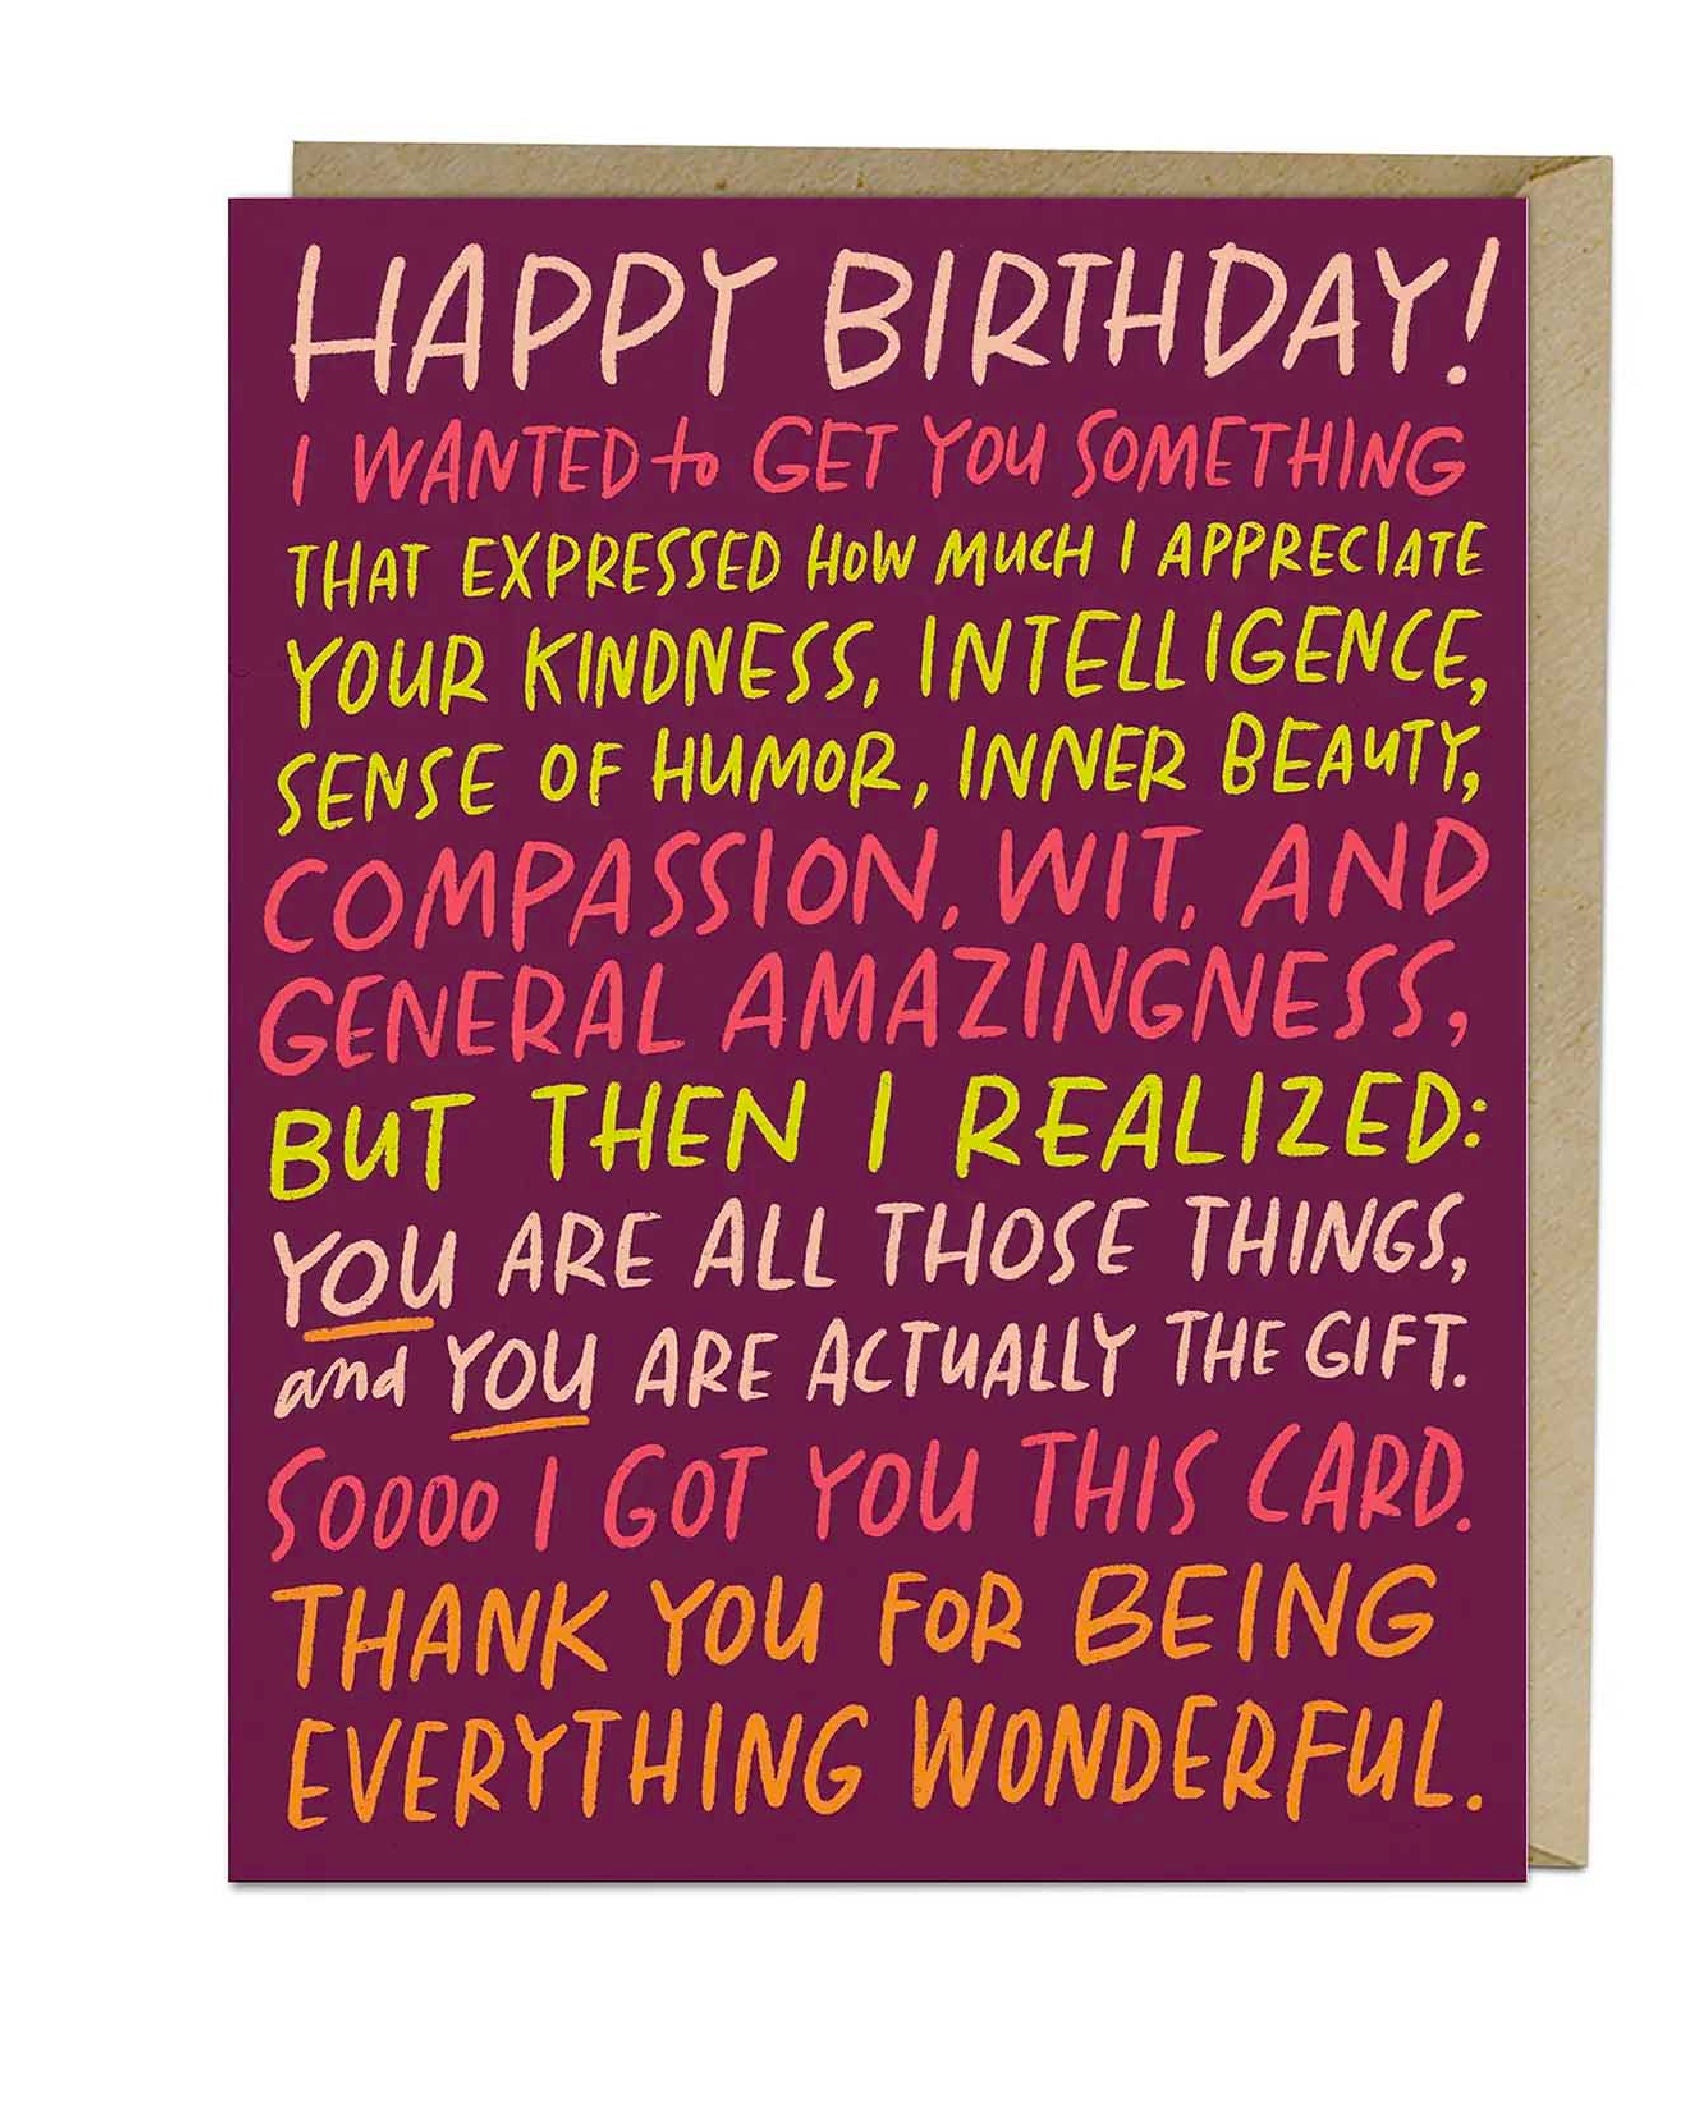 Everything Wonderful Birthday Card